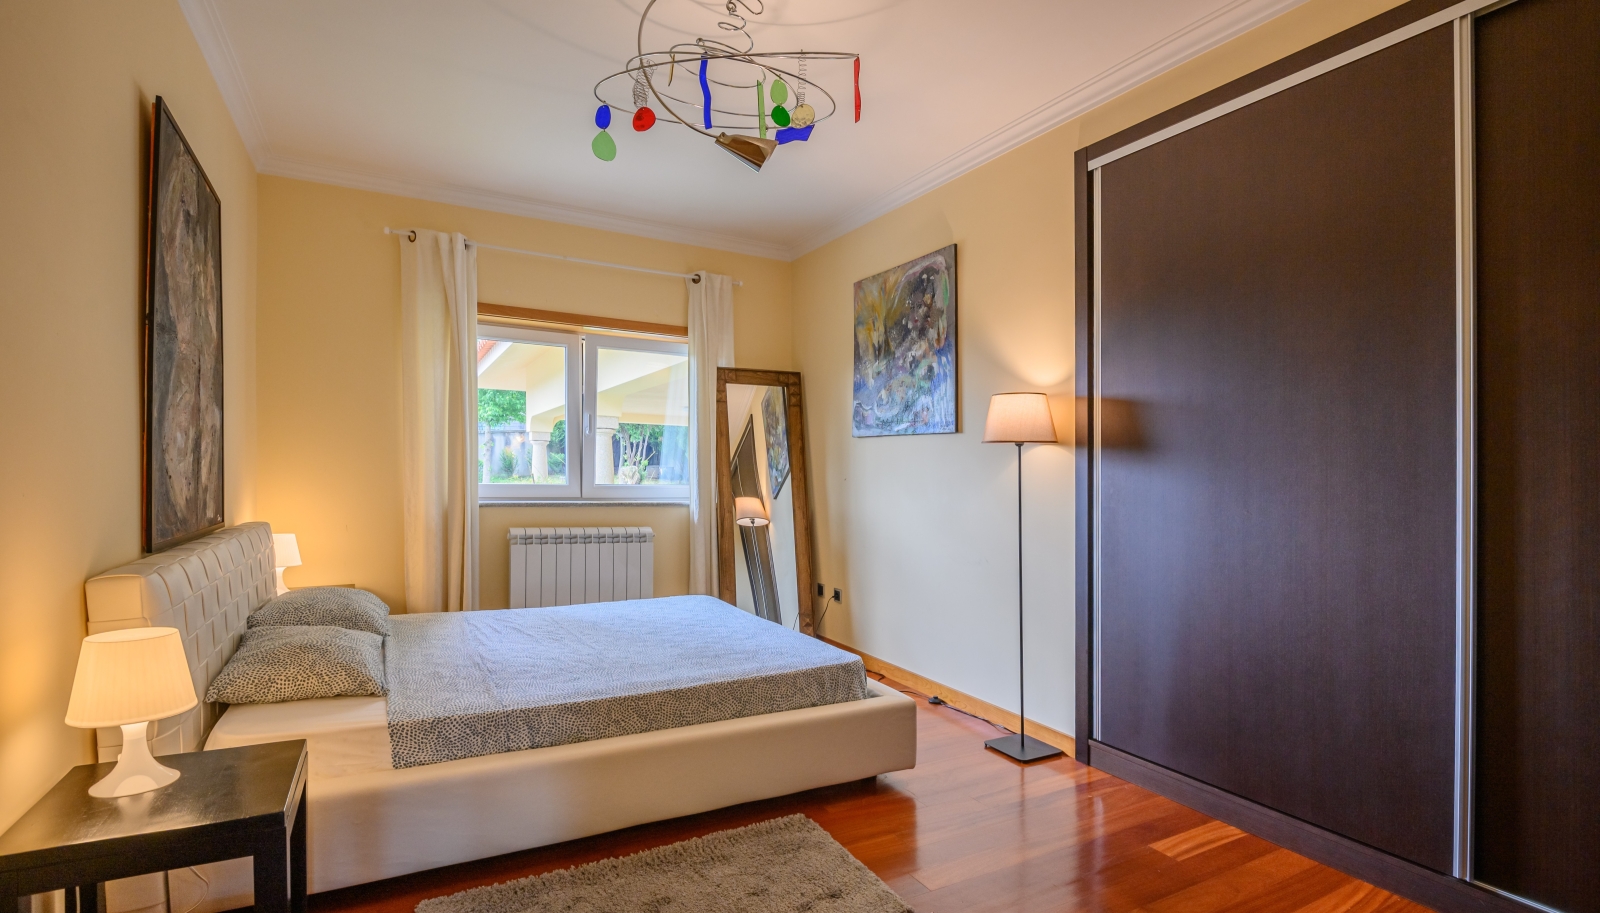 5 bedroom villa with garden and views, for sale, in Foz do Sousa in Gondomar, Porto, Portugal_225206